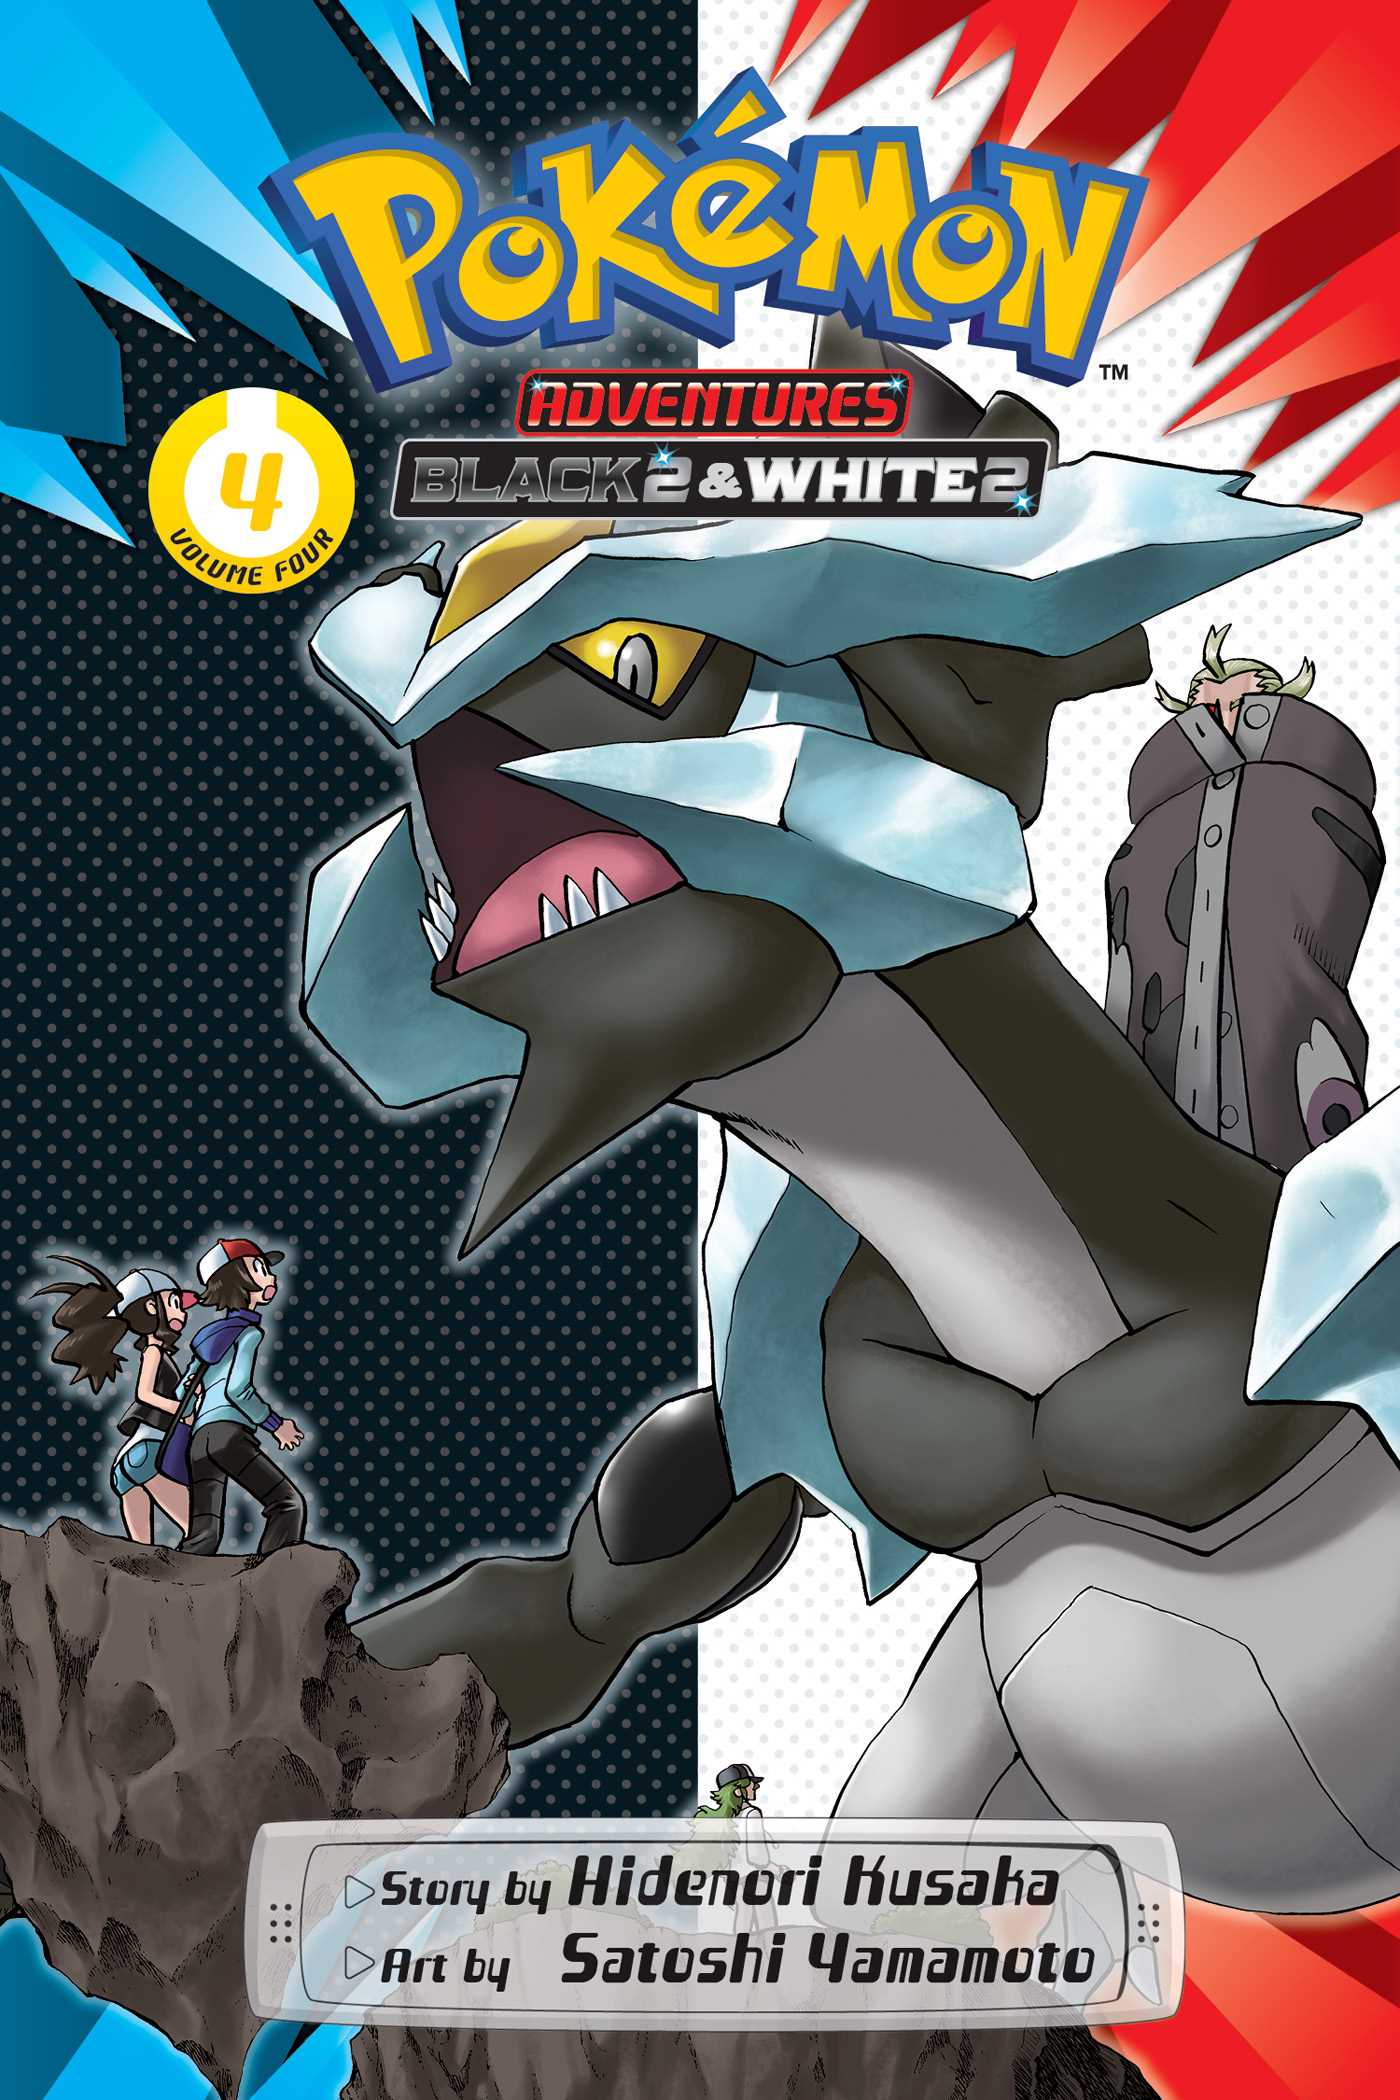 Pokémon Adventures: Black 2 & White 2 Manga Ends - News - Anime News Network